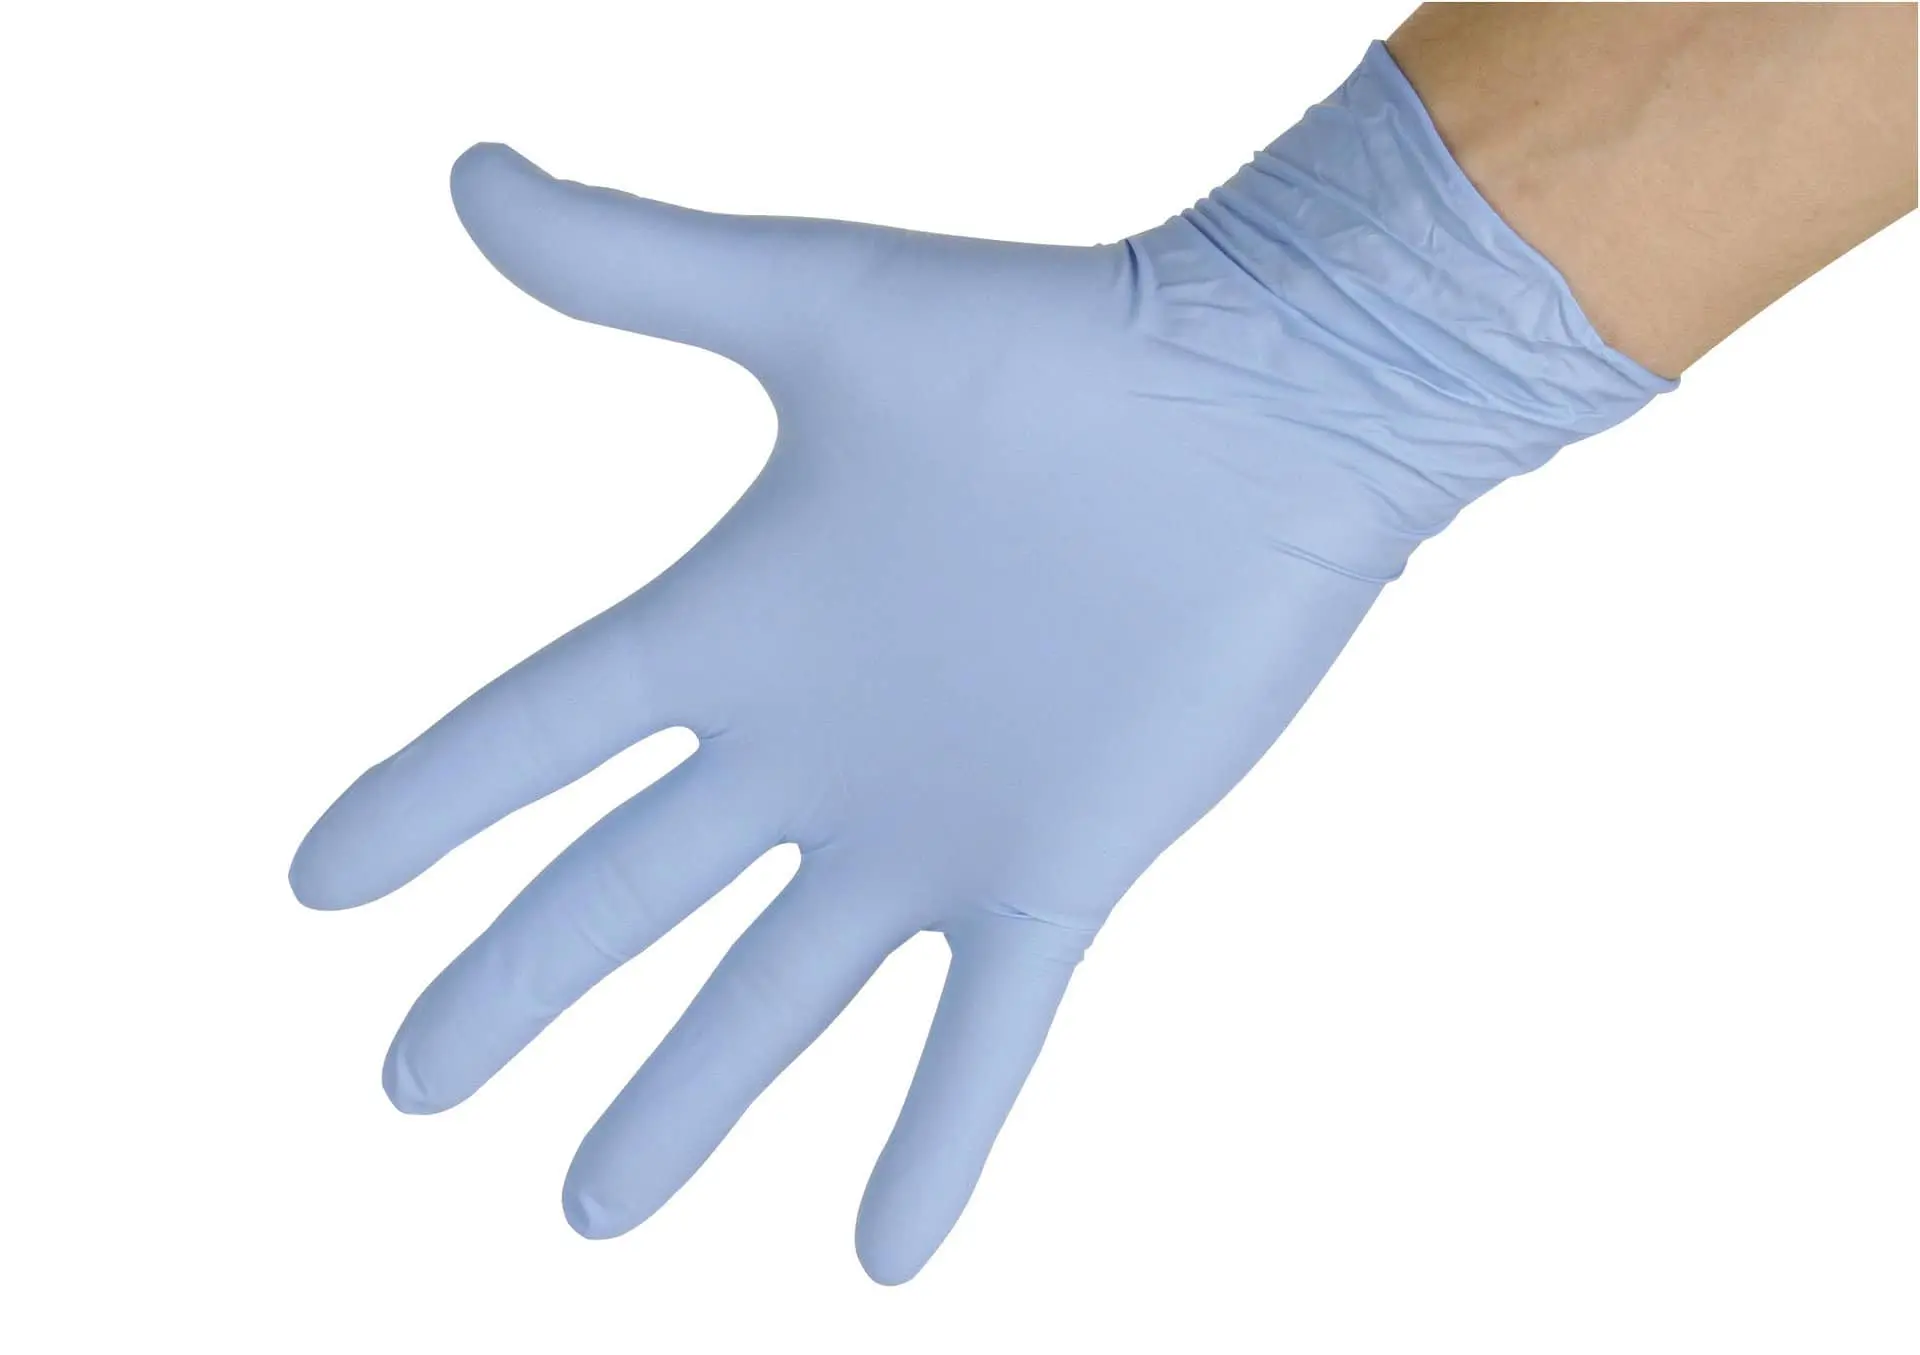 Nitr. Top Pro, size XXL, blue Dispos. Glove 90pc, Unpowdered